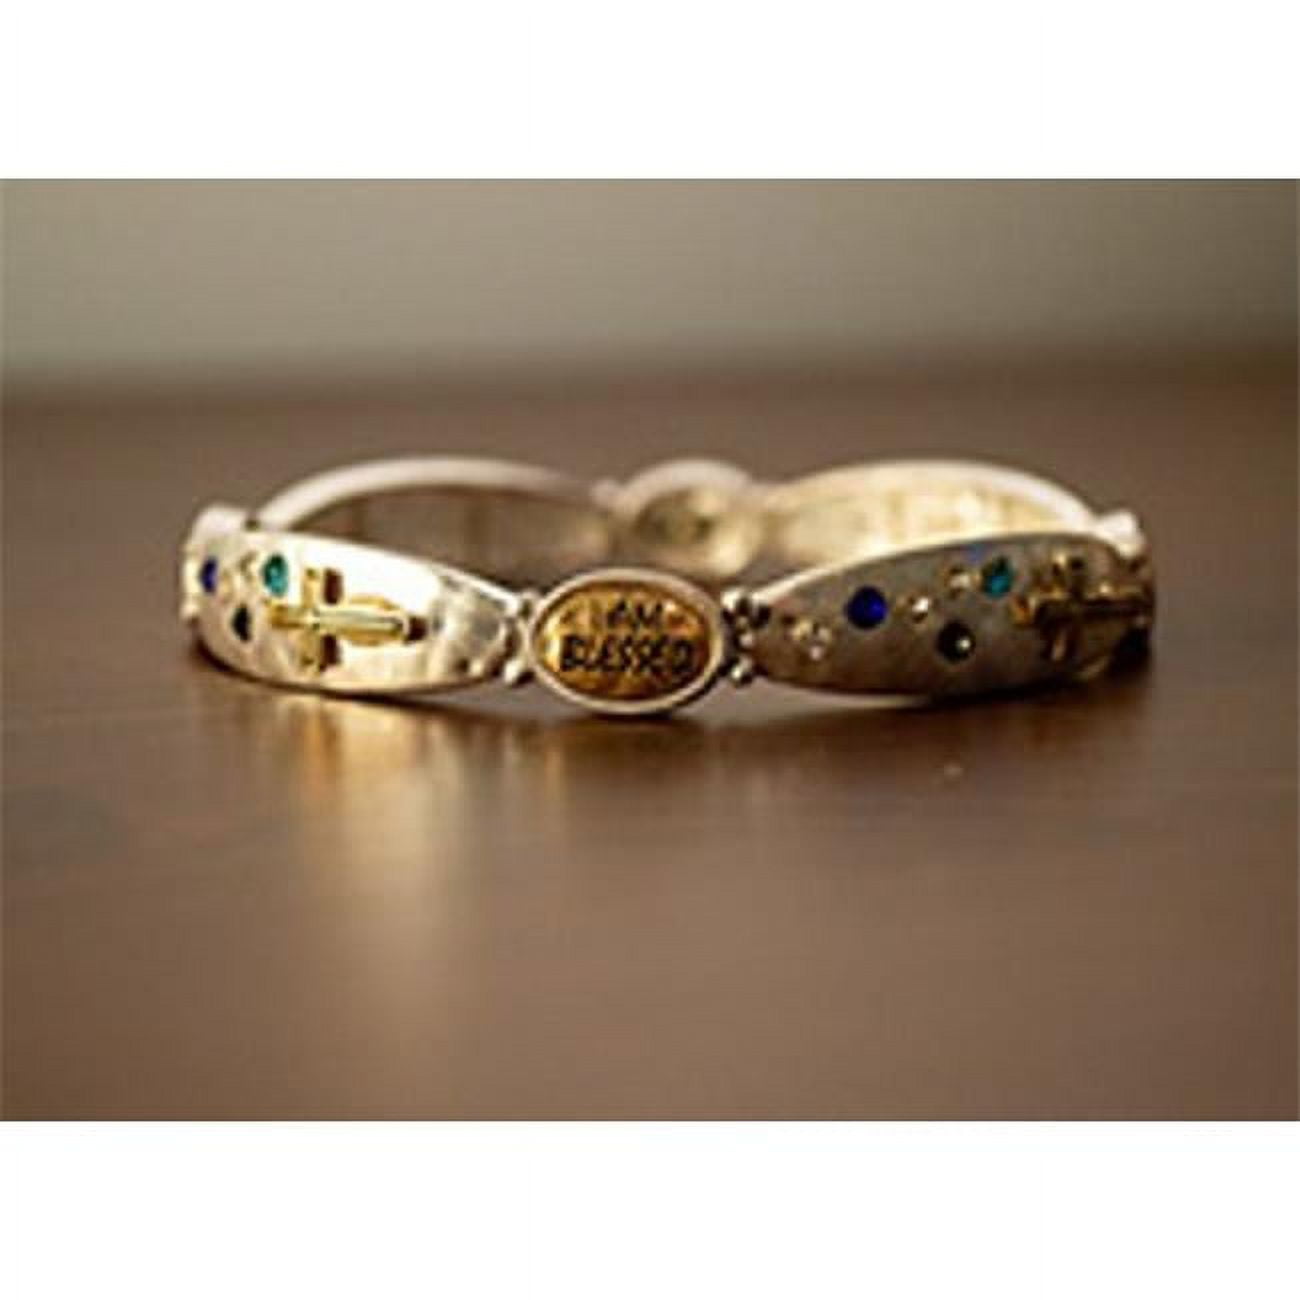 St James bracelet from Spanish Camino de Santiago – My Camino Jewellery